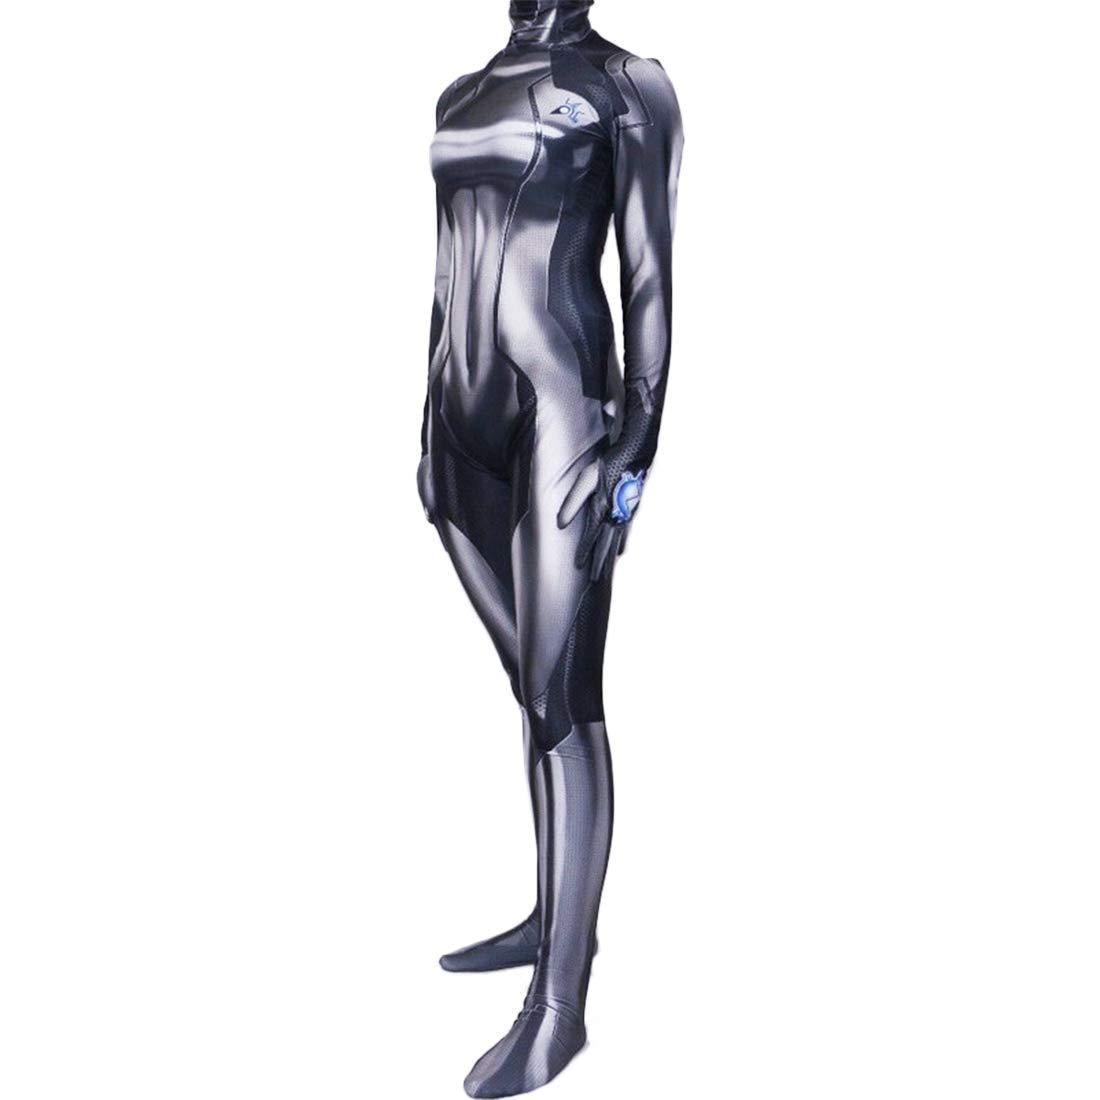 Cosplay Life Zero Suit Samus Black Metroid Cosplay Costume | Fabric  Bodysuit Zentaisuit | ZSS Halloween Costume (Black, M) 